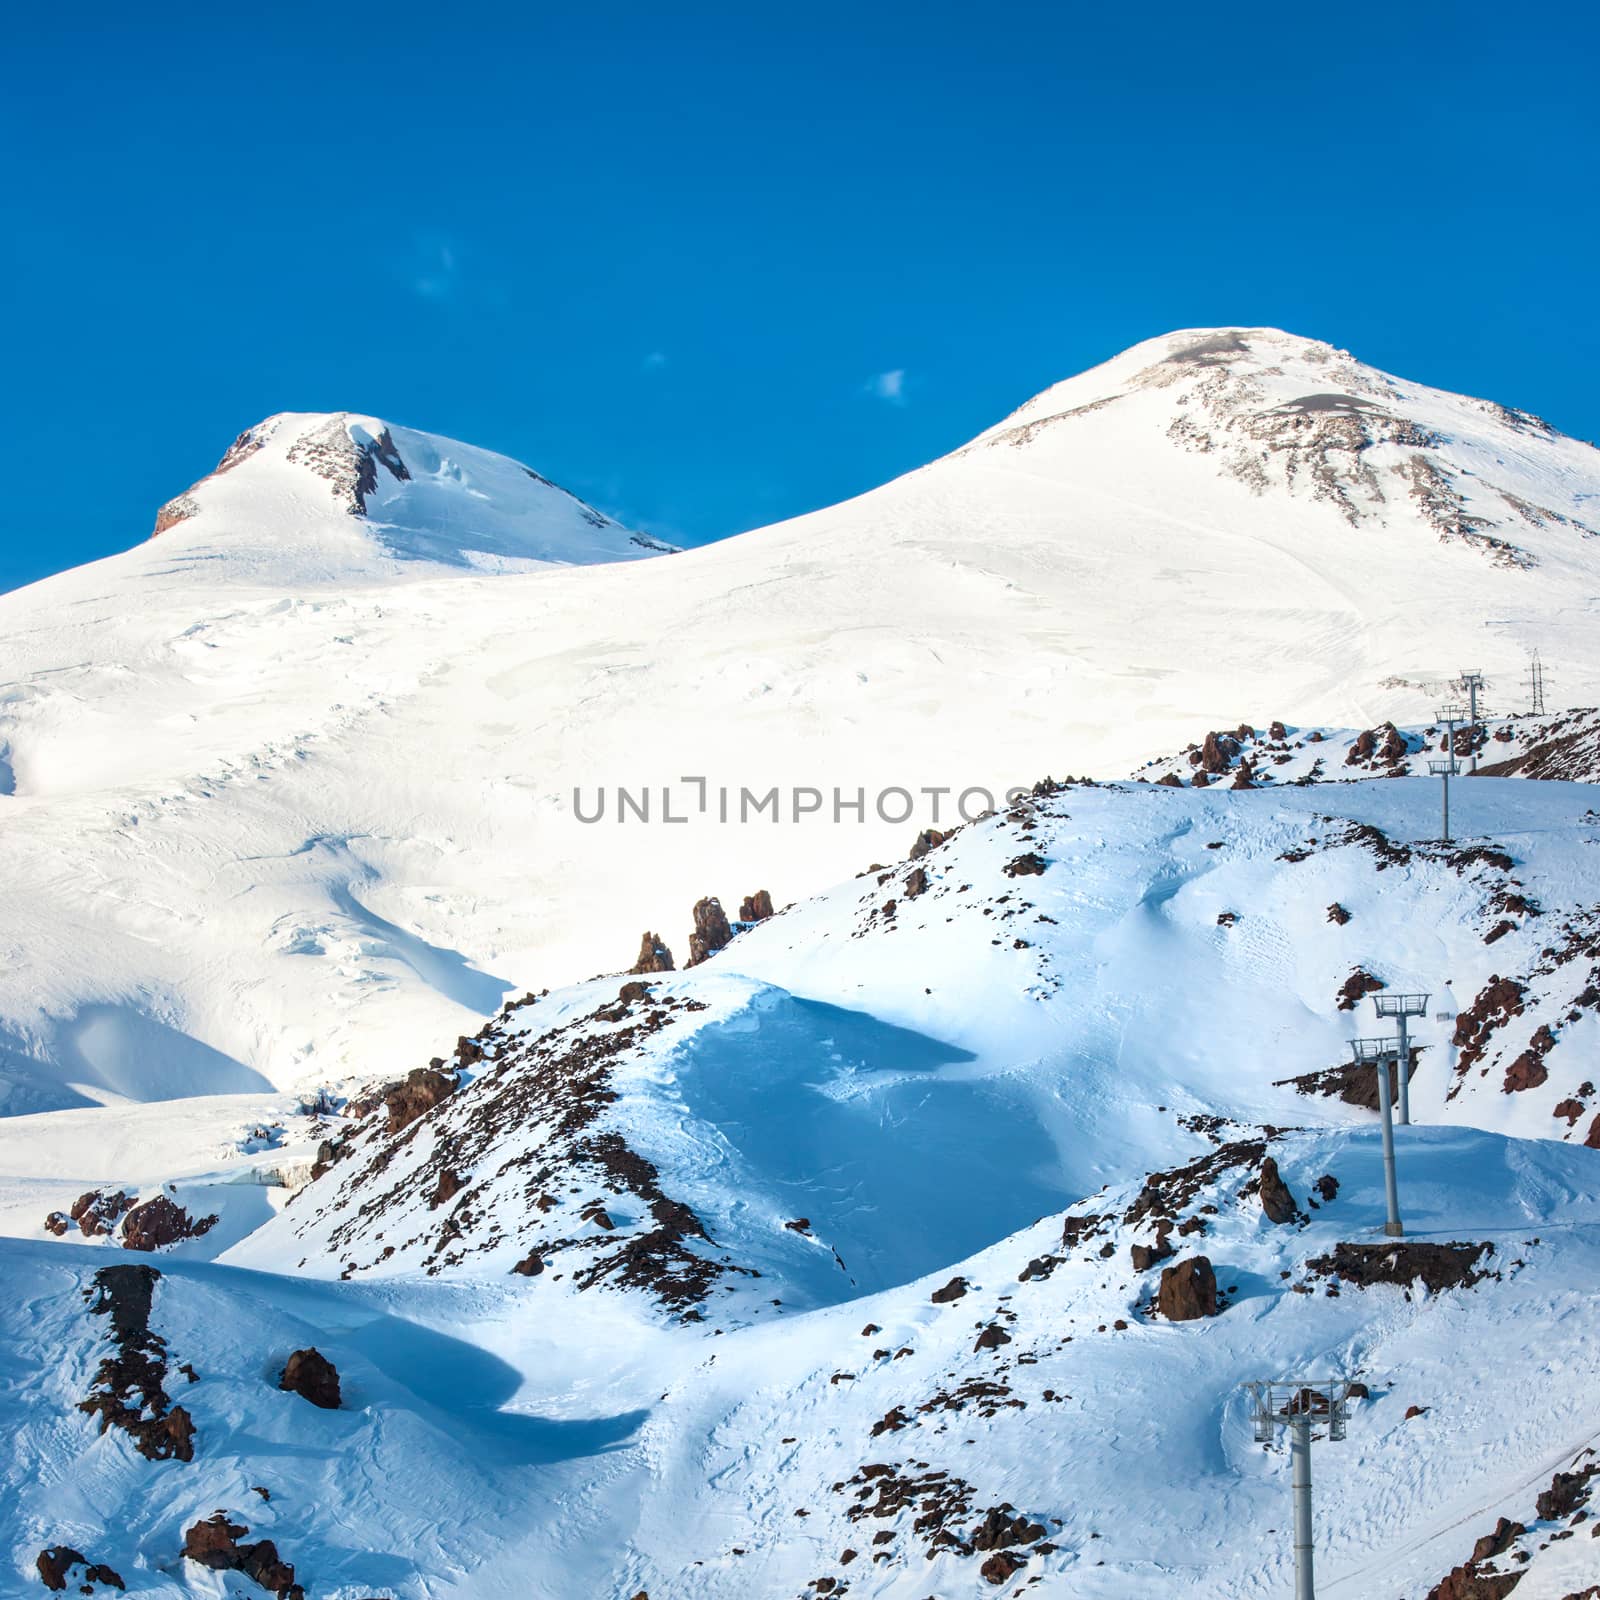 Two peaks of Elbrus mountain in snow by vapi